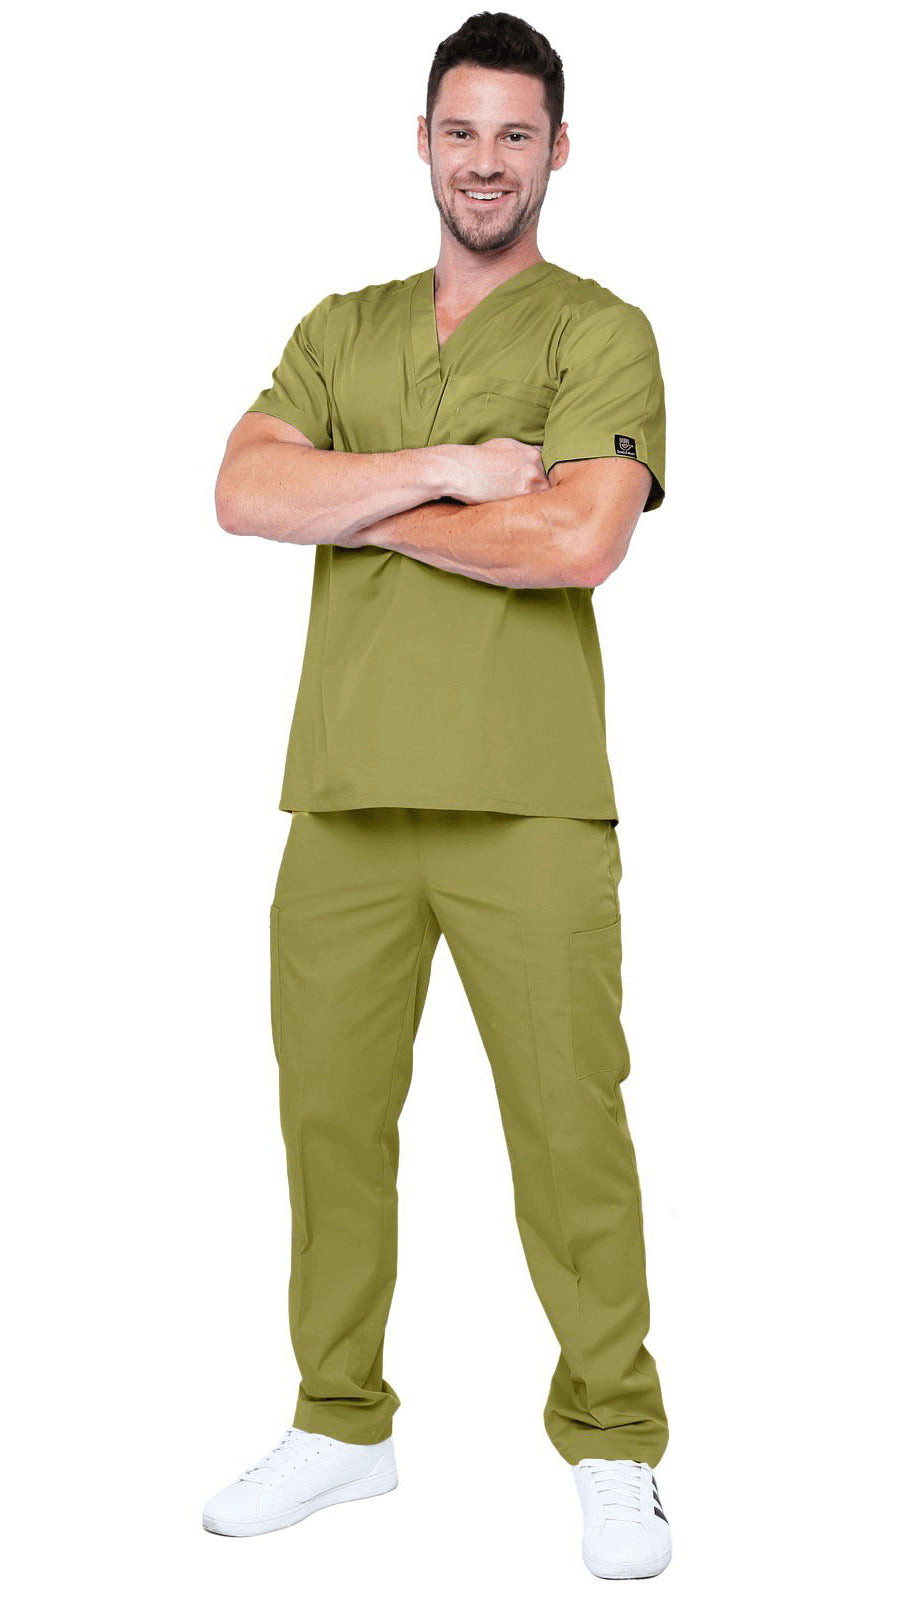 Dress A Med Men's 6 Pocket Stretch Uniform Scrubs - Style ST101